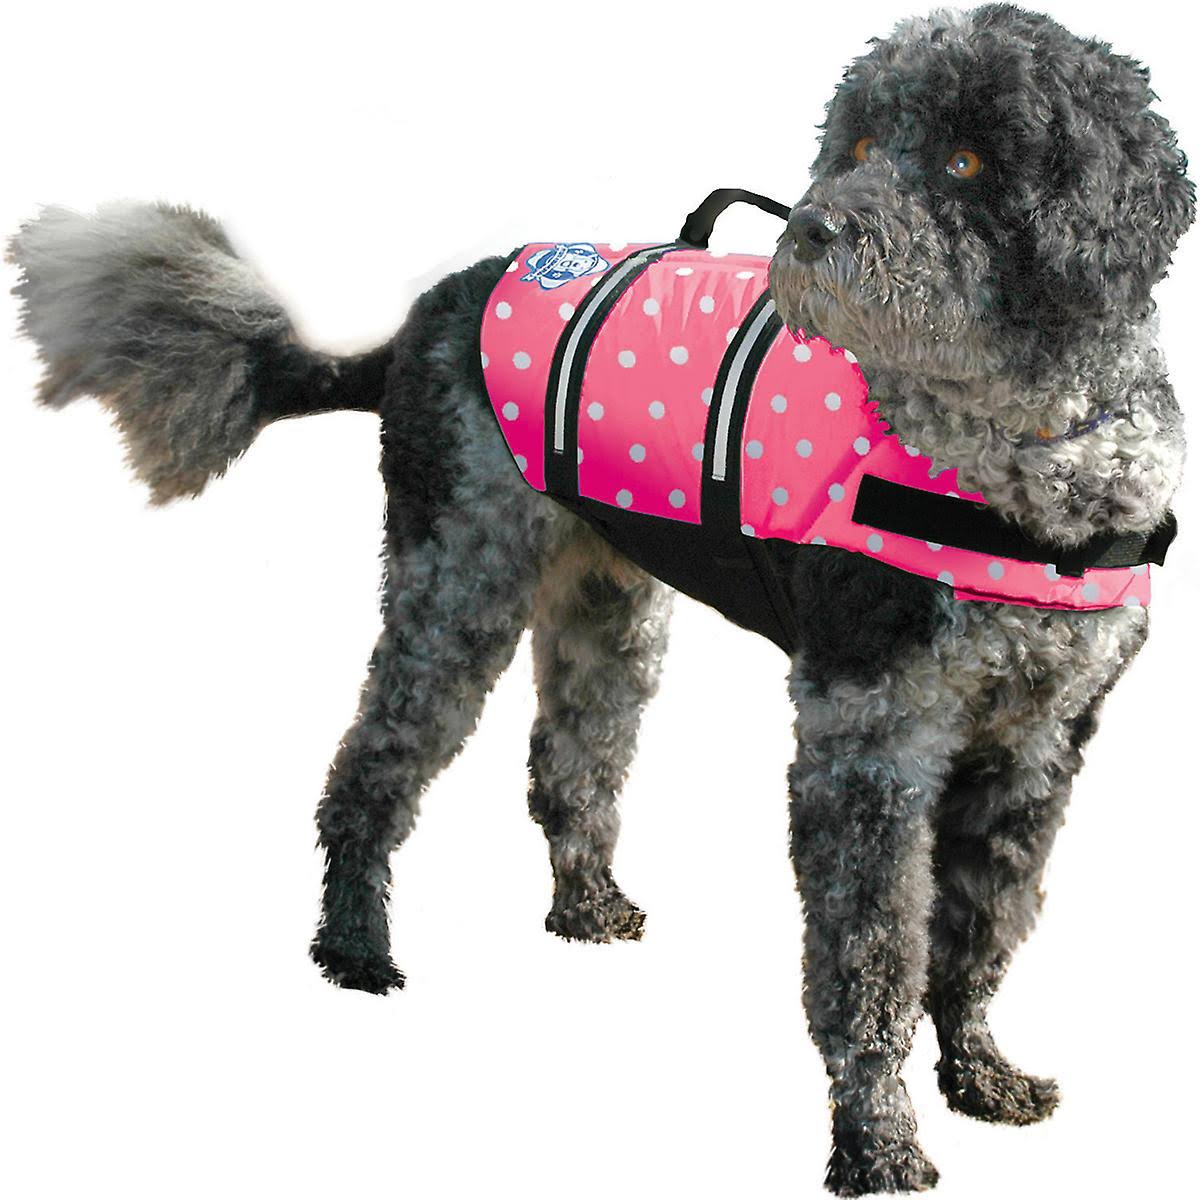 Paws Aboard Doggy Life Jacket Large Pink Polka Dot